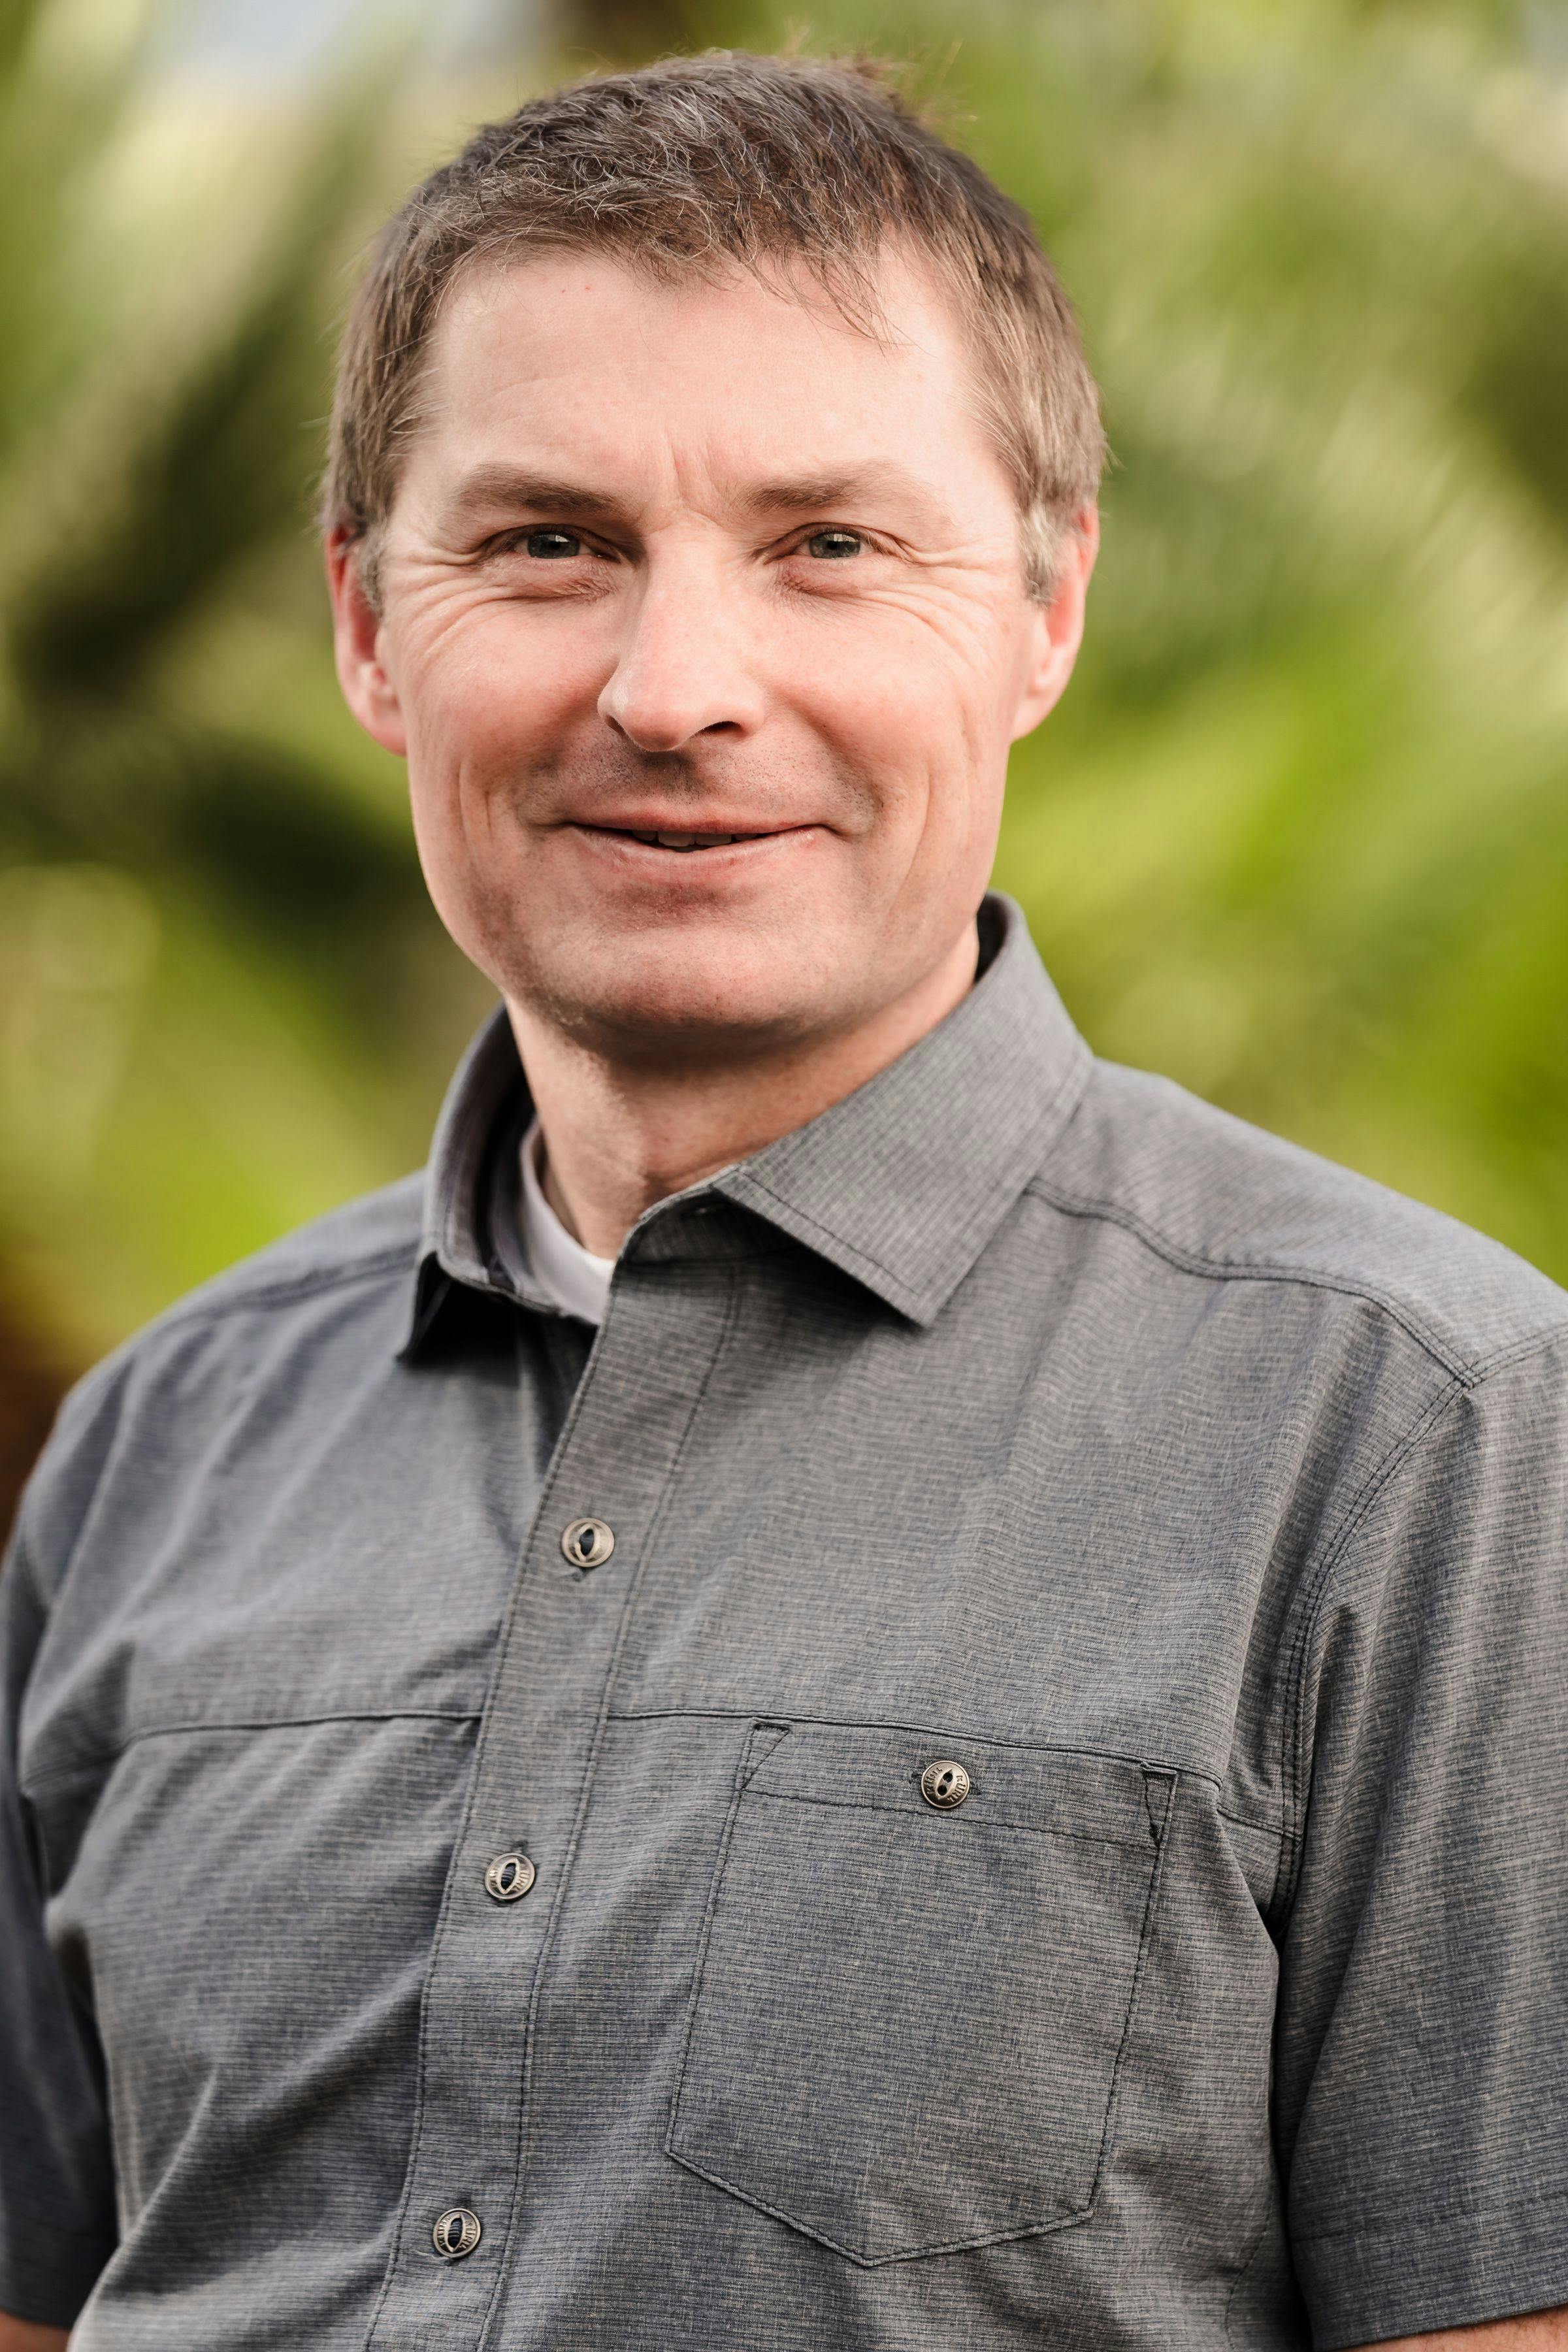 Mike Linnert, CEO of Actium Health